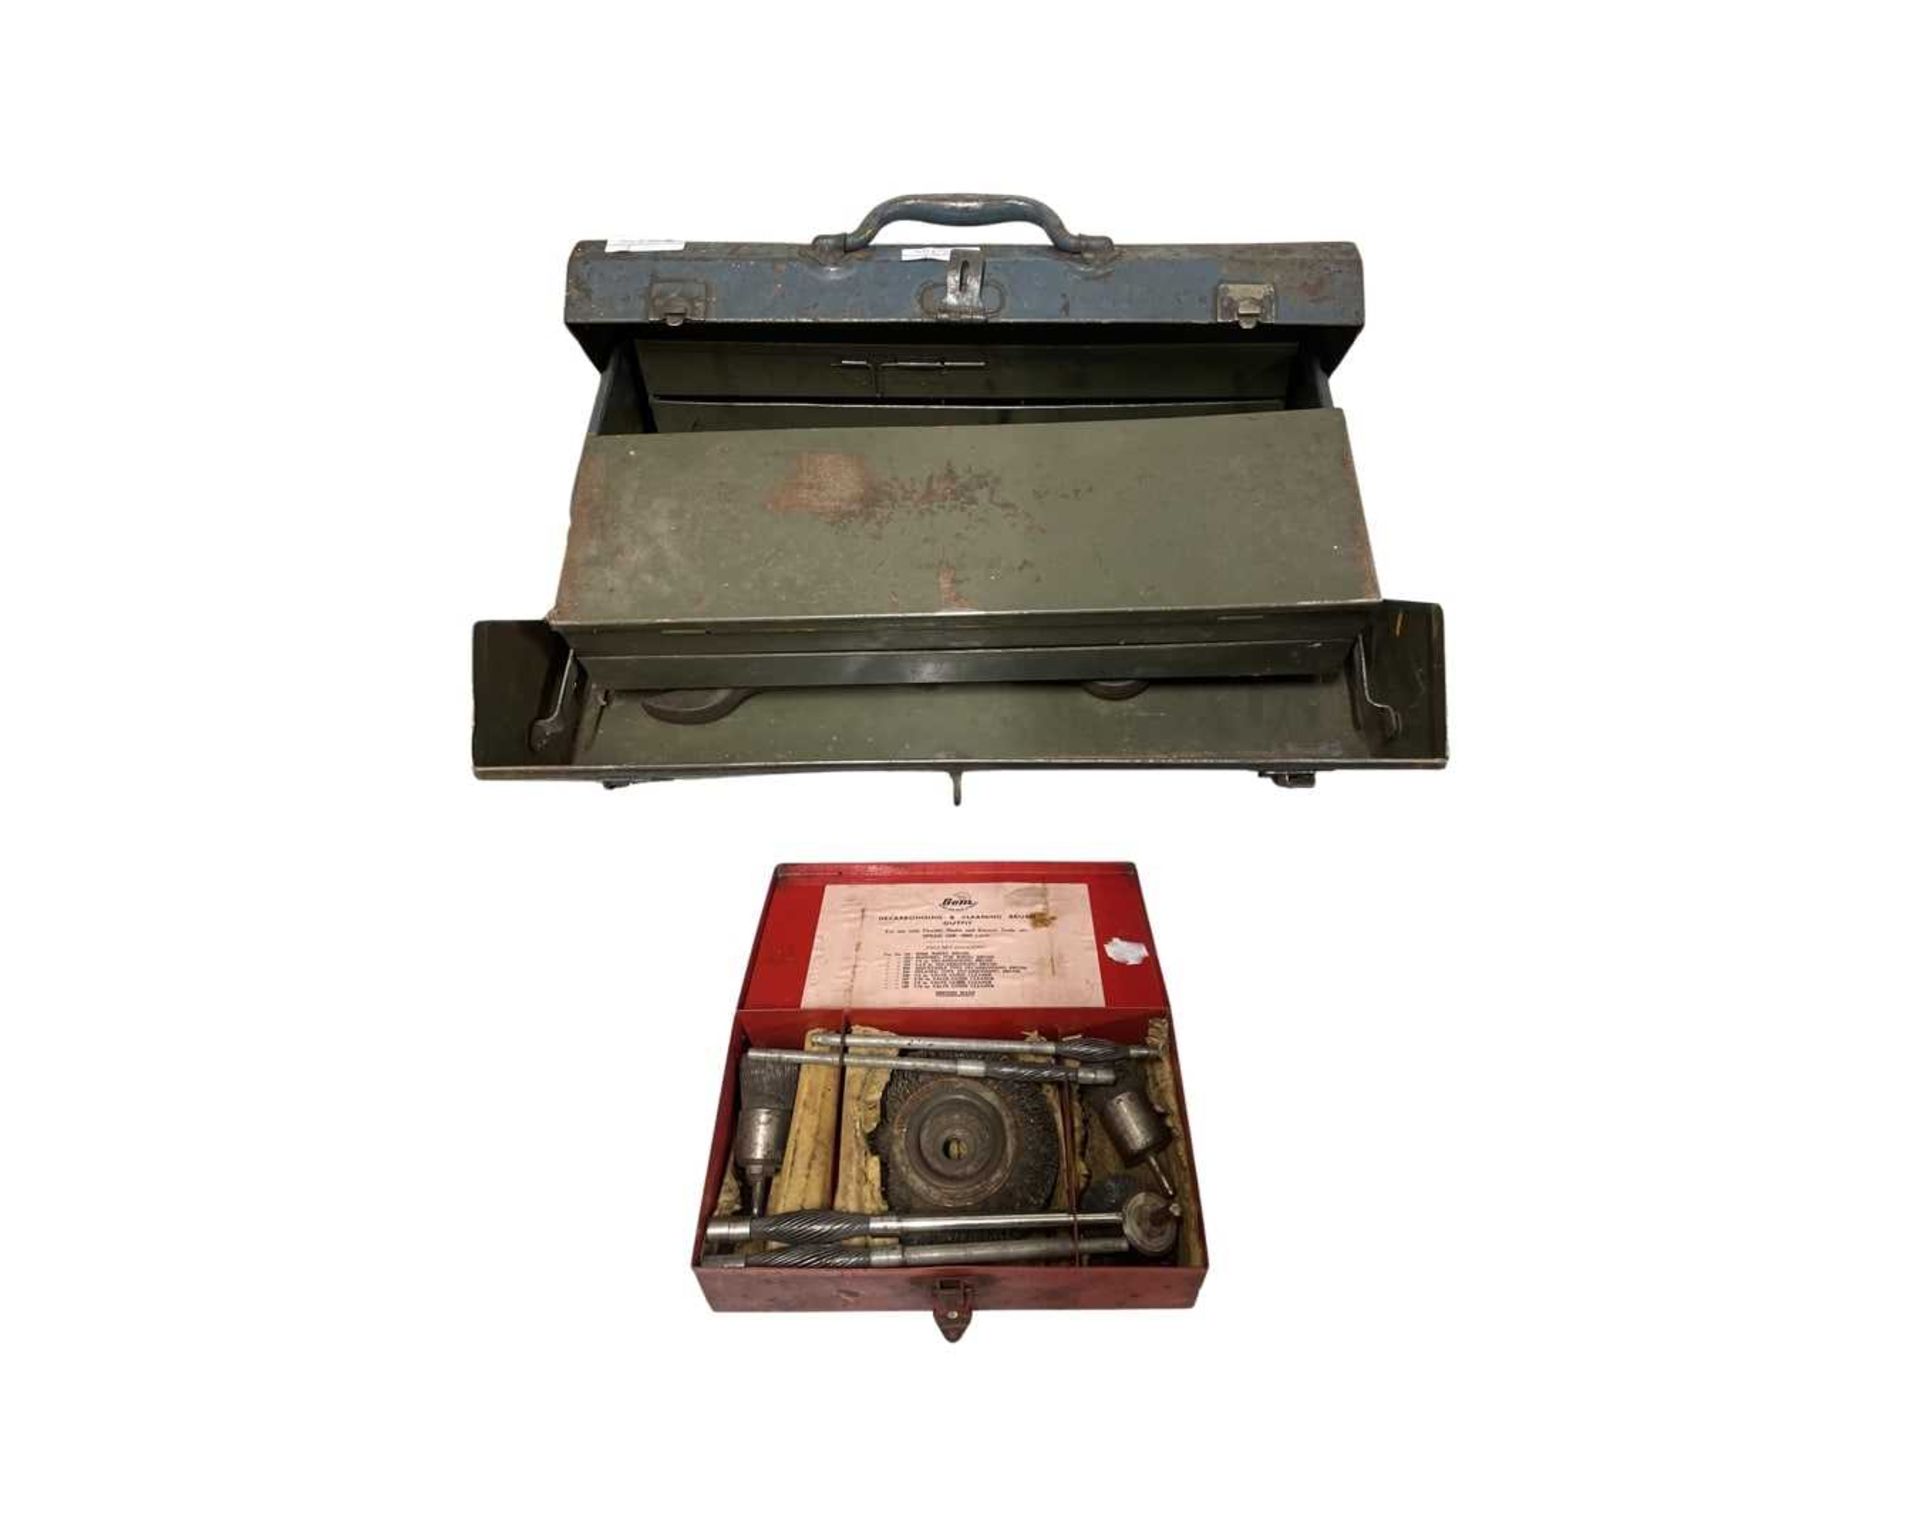 Vintage Canadian toolbox together with a de-carbonising brush set